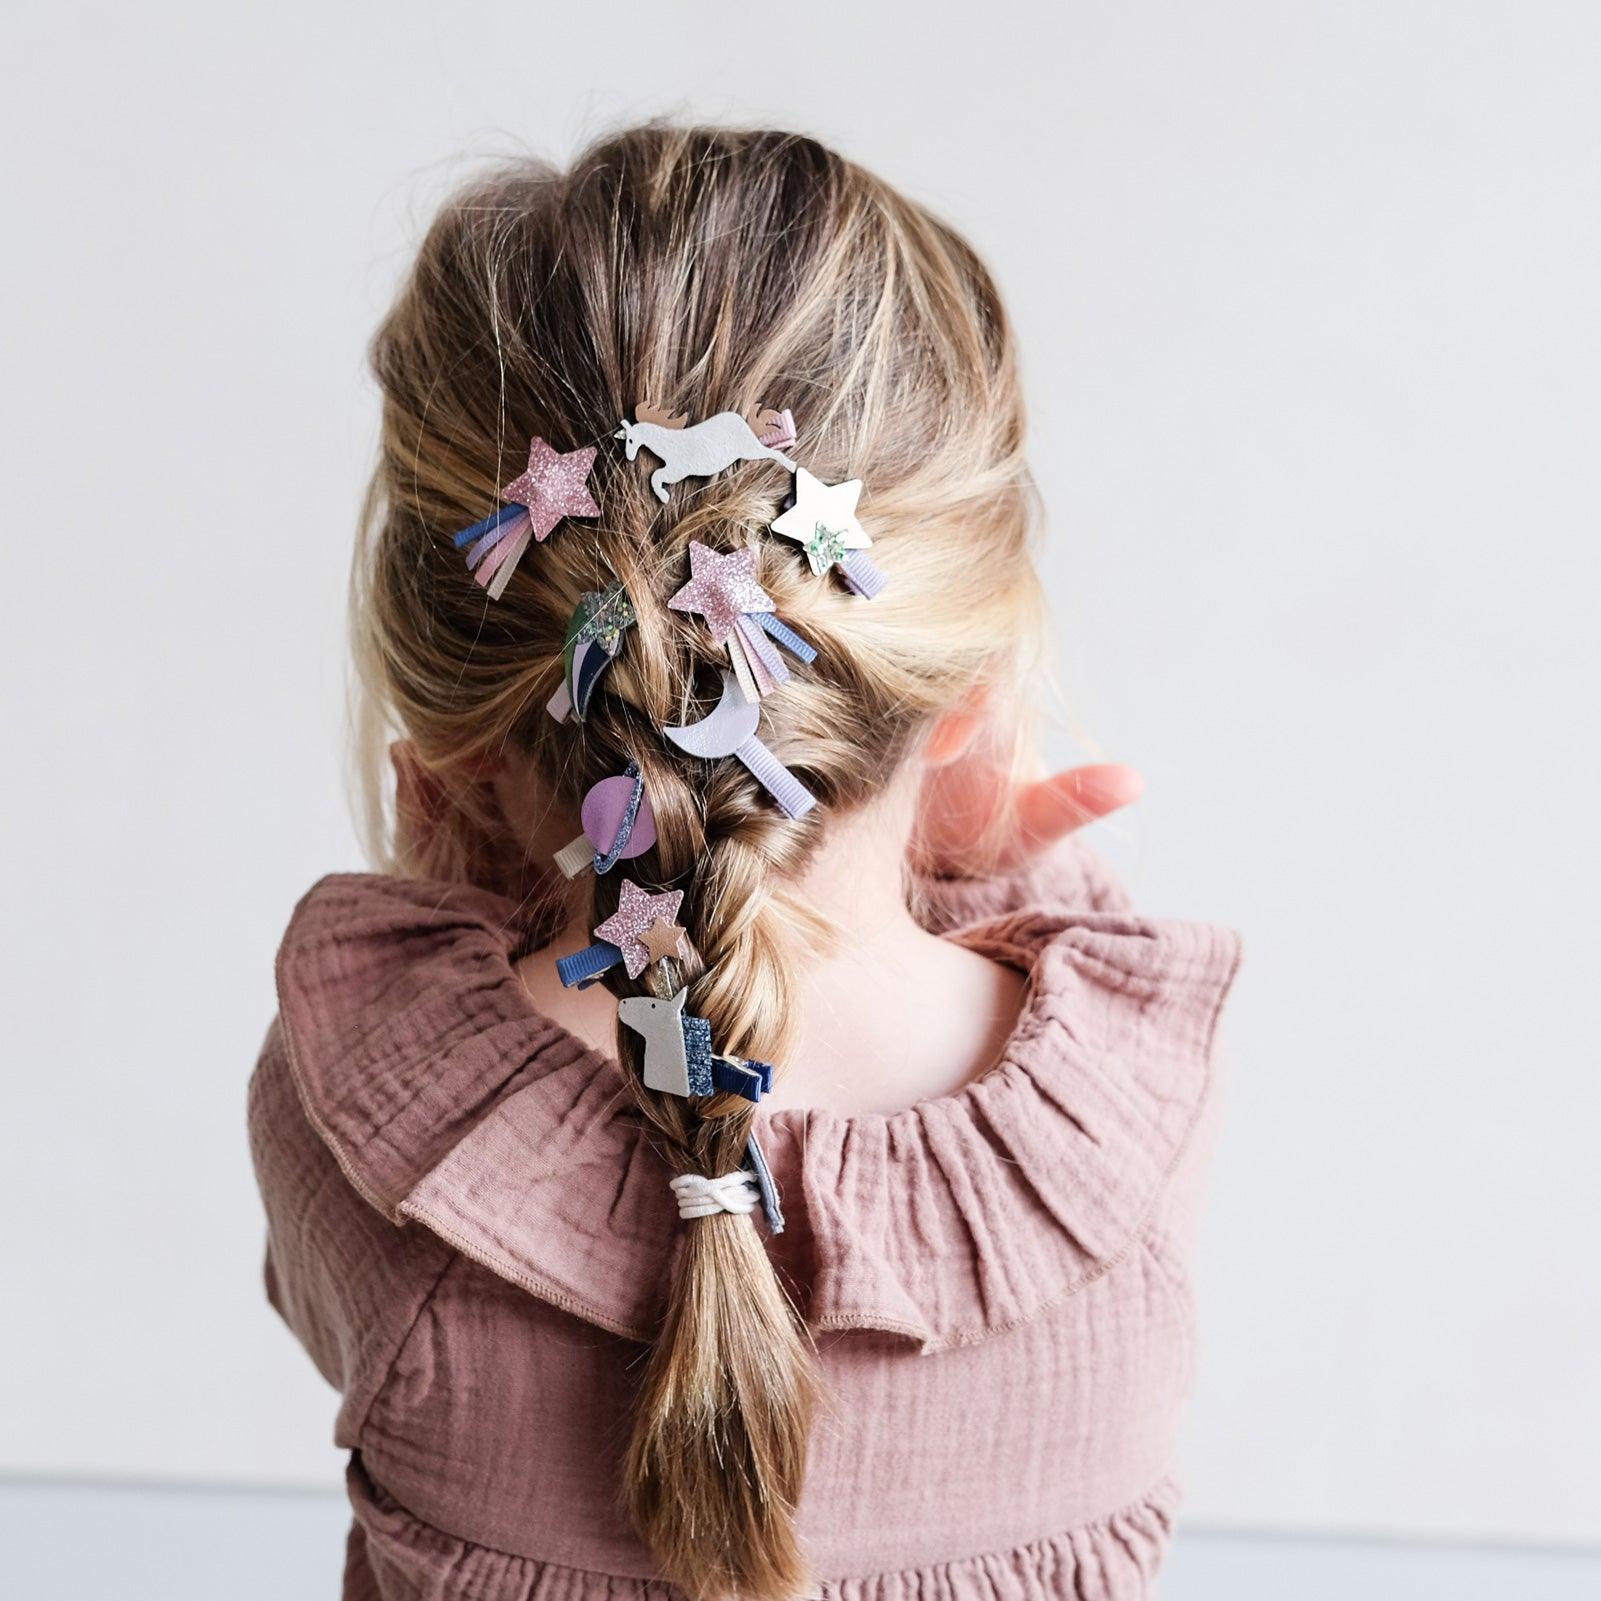 Galaxie Mini-Haarspangen - Nook' d' Mel - Kinder Concept Store